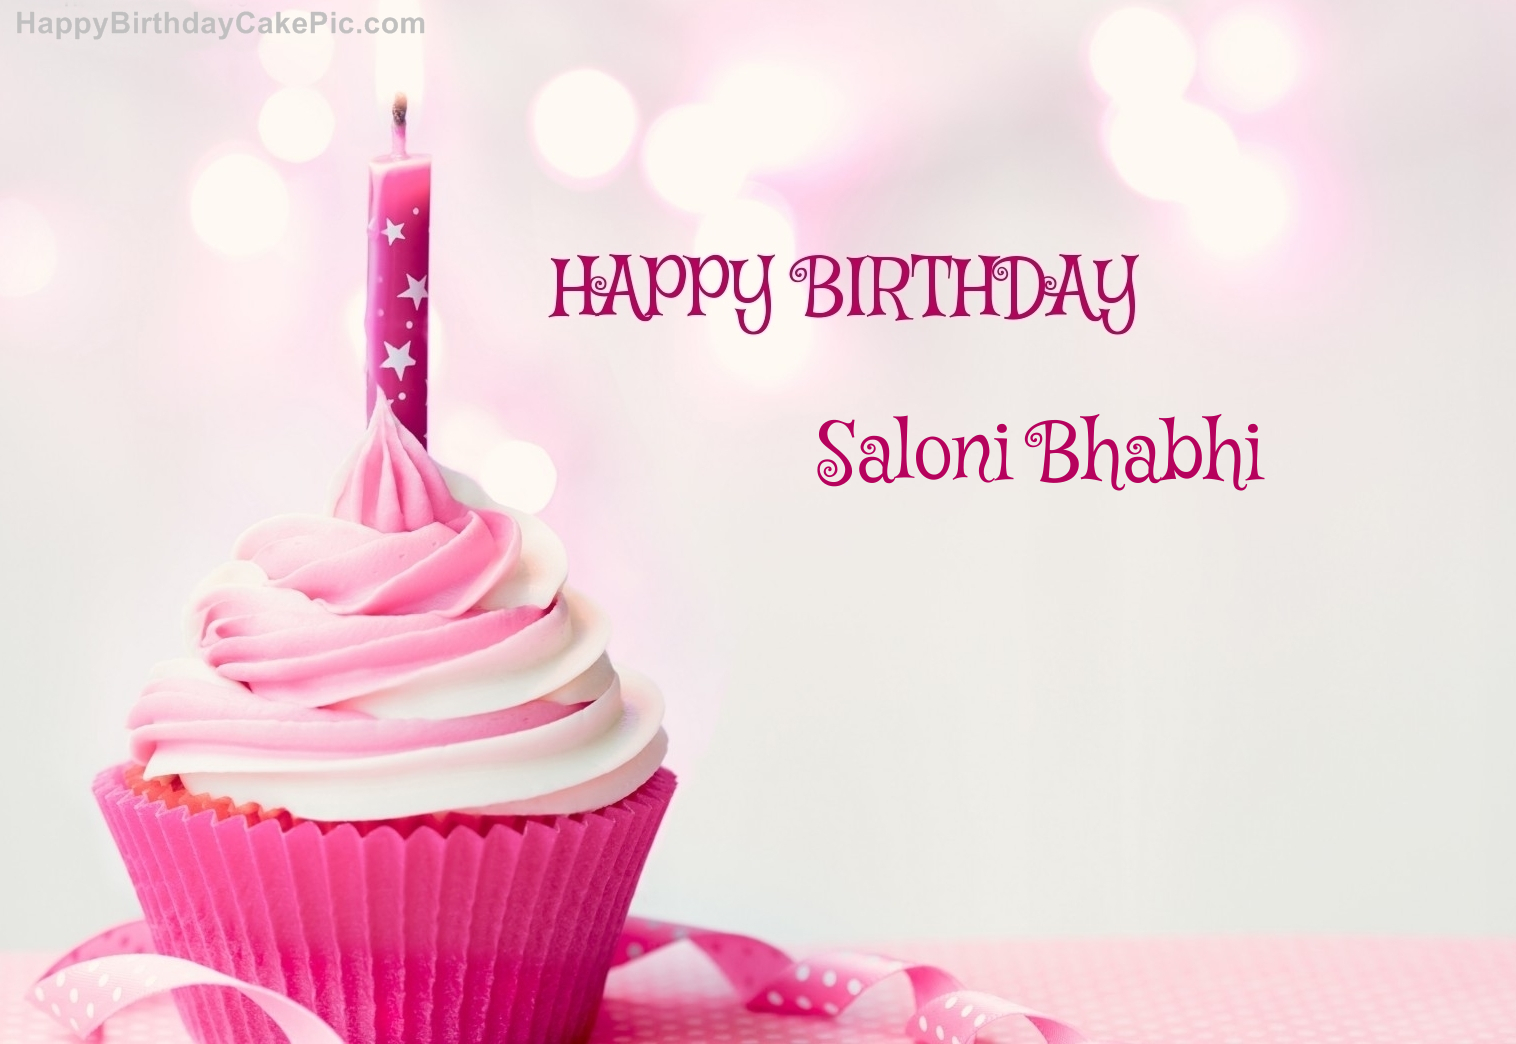 ️ Happy Birthday Cupcake Candle Pink Cake For Saloni Bhabhi